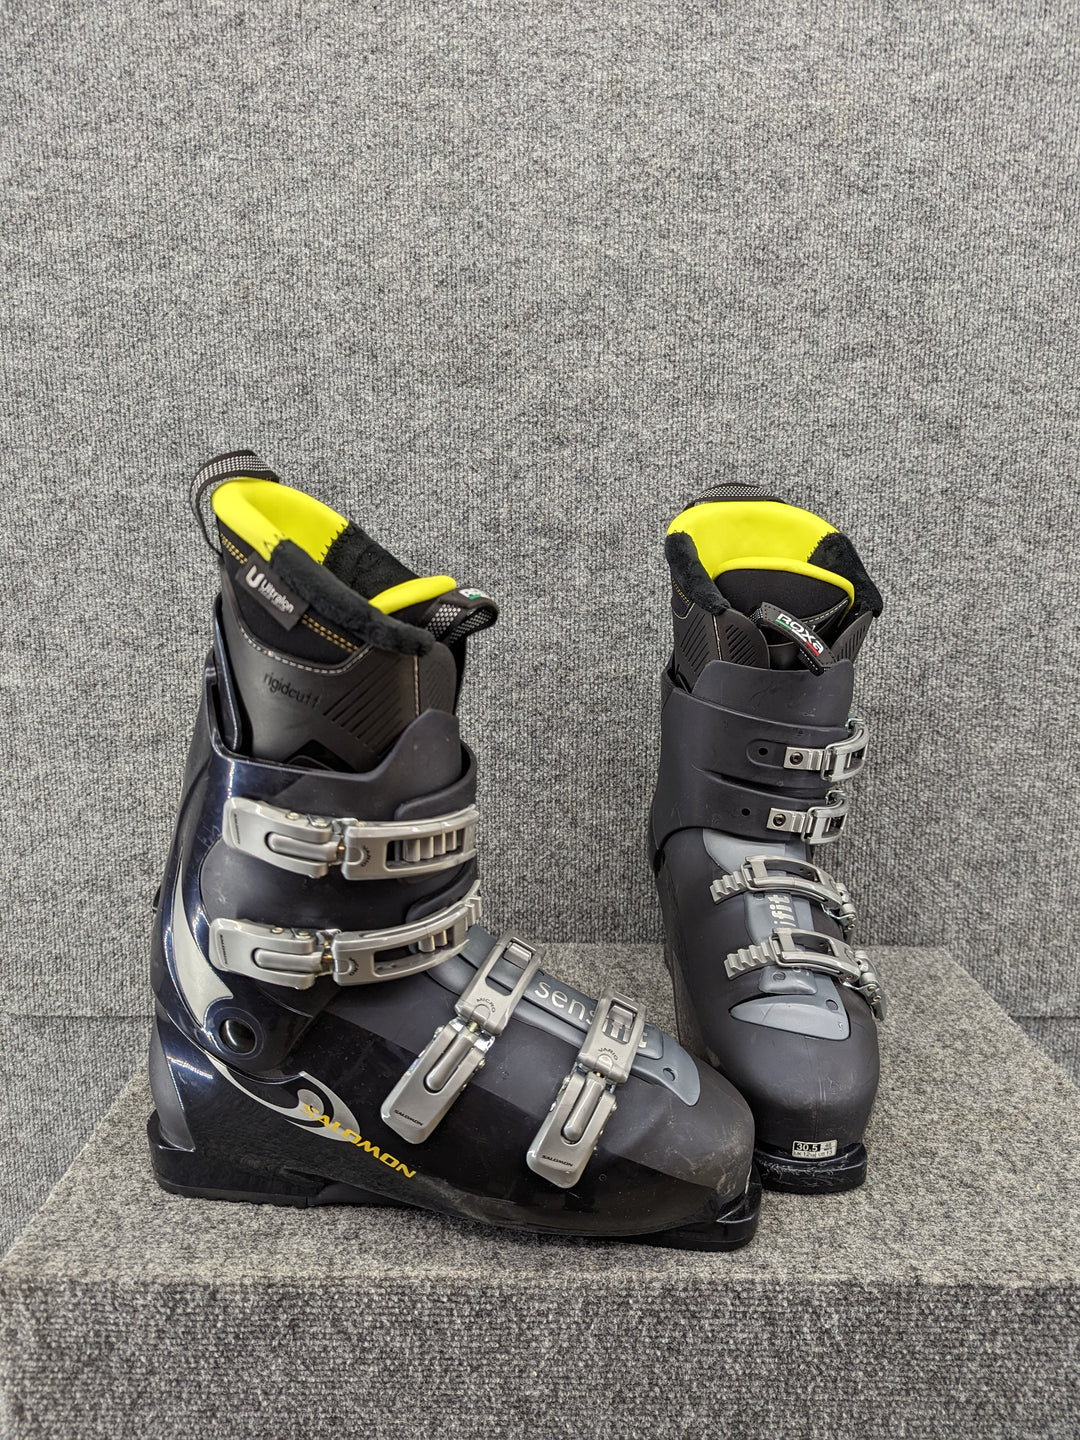 Astrolabe kant Lure Salomon Size 12.5/30.5 Men's Alpine Ski Boots – Rambleraven Gear Trader